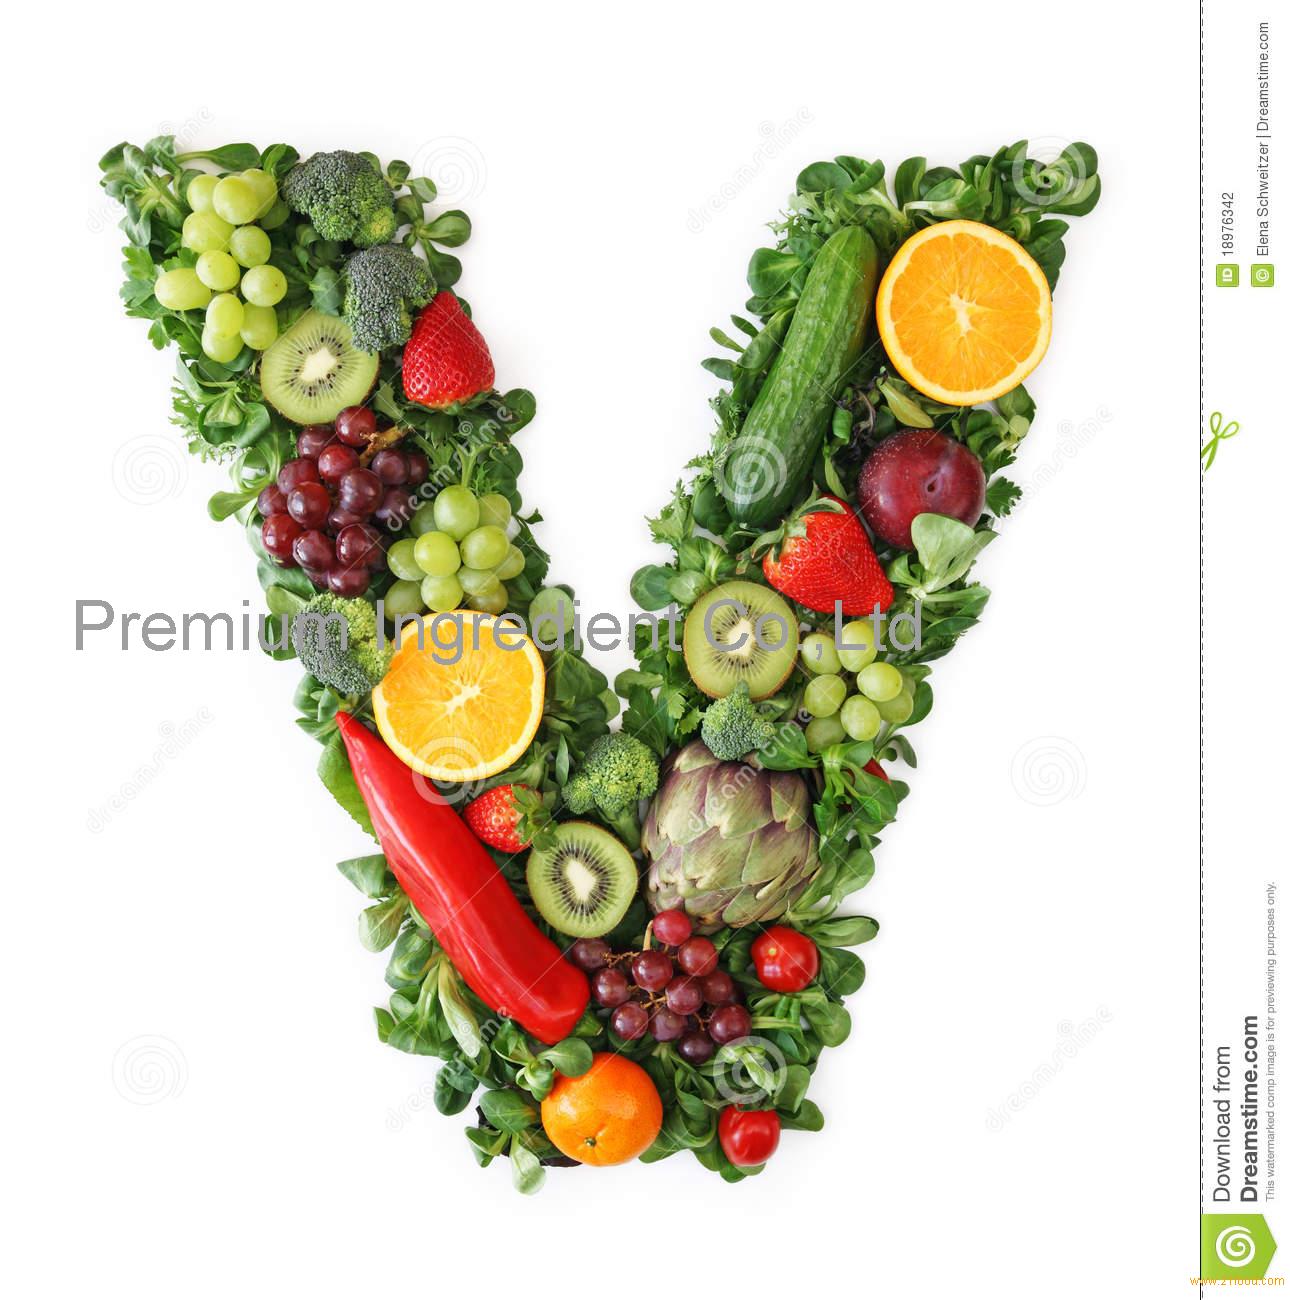 Cyanocobalamin Vitamin B12 food grade and api grade